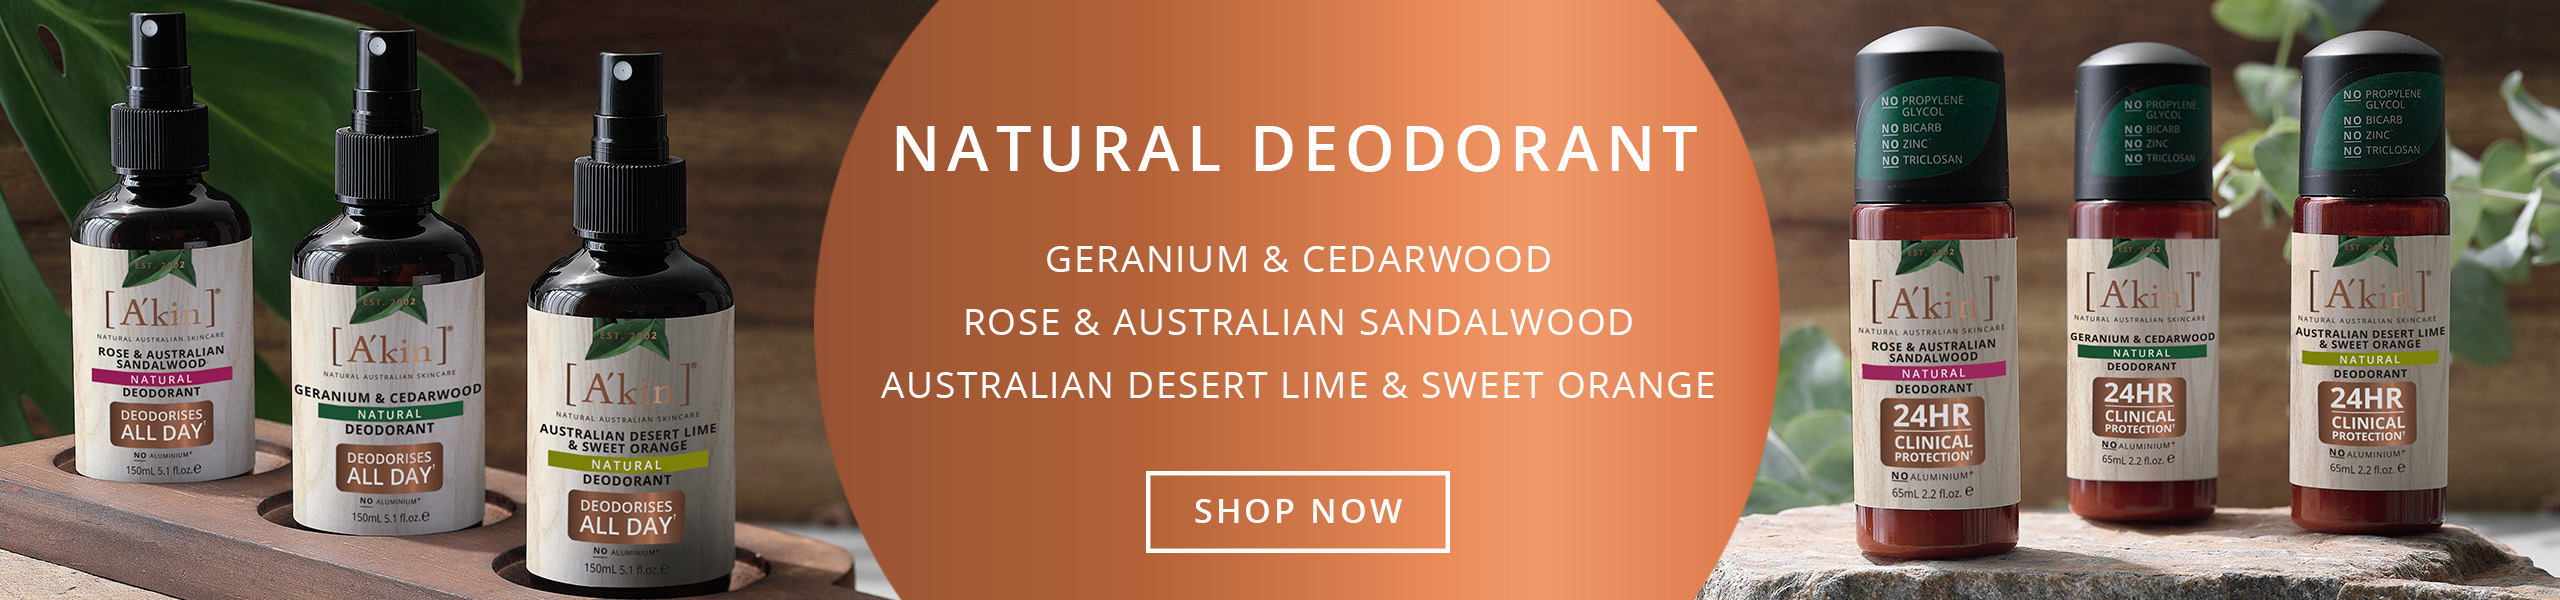 A'kin Natural Deodorant Range